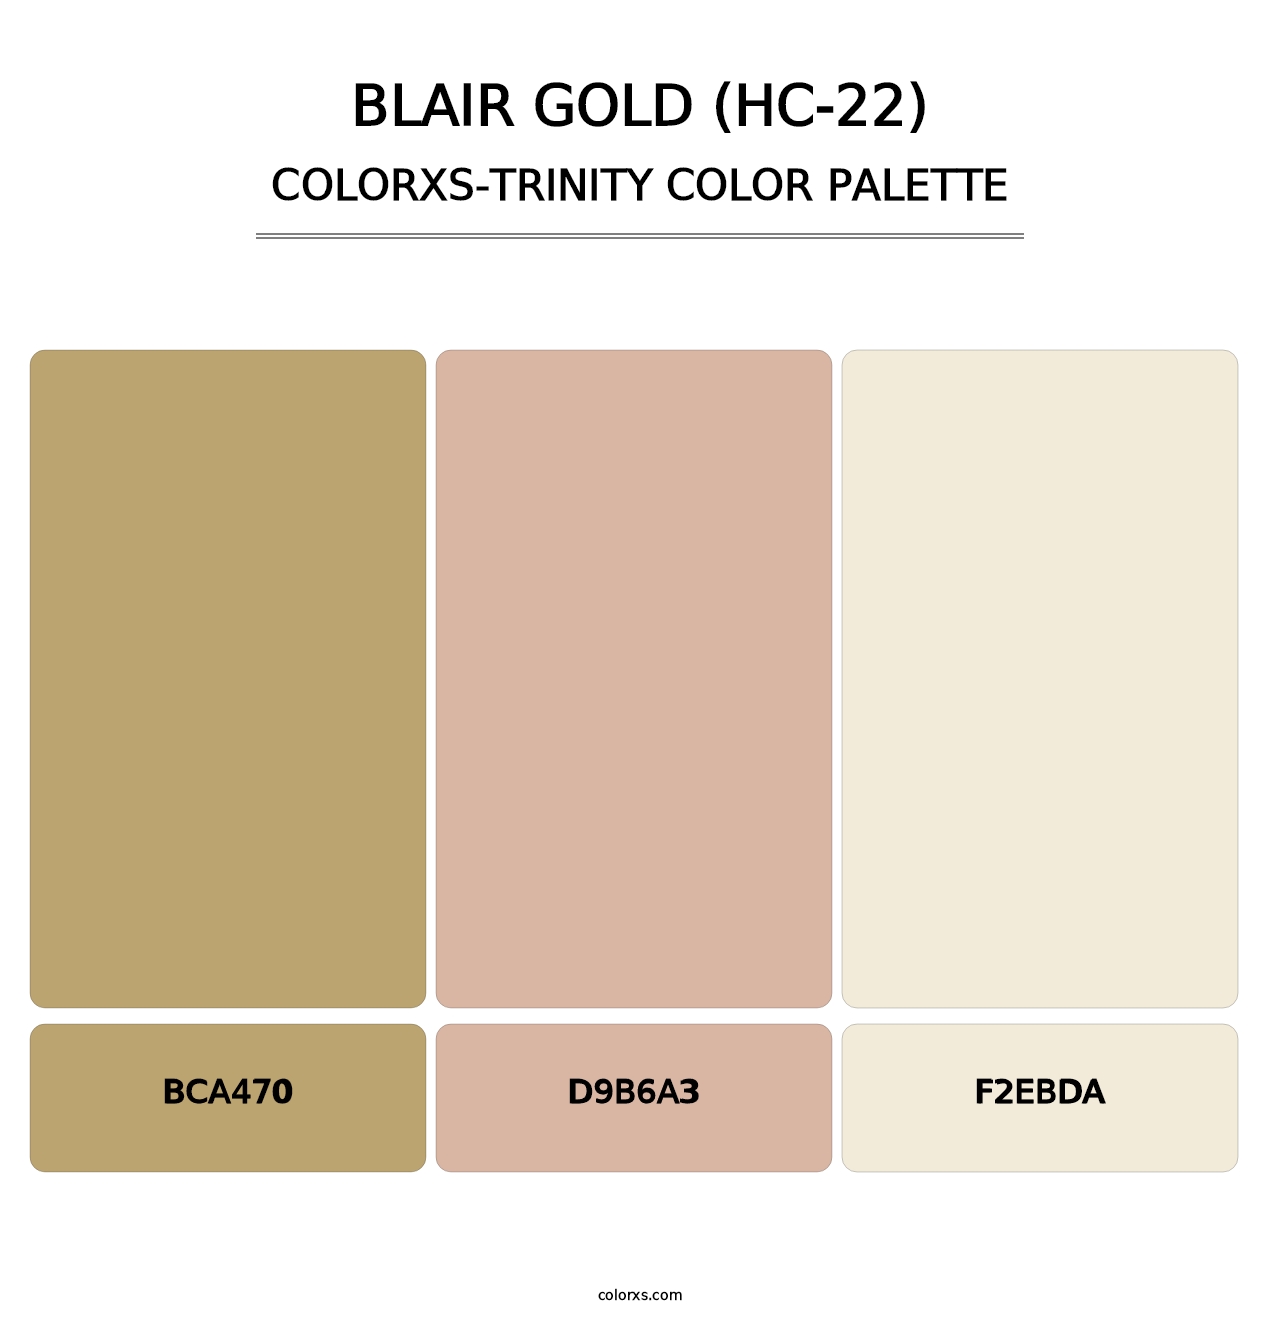 Blair Gold (HC-22) - Colorxs Trinity Palette